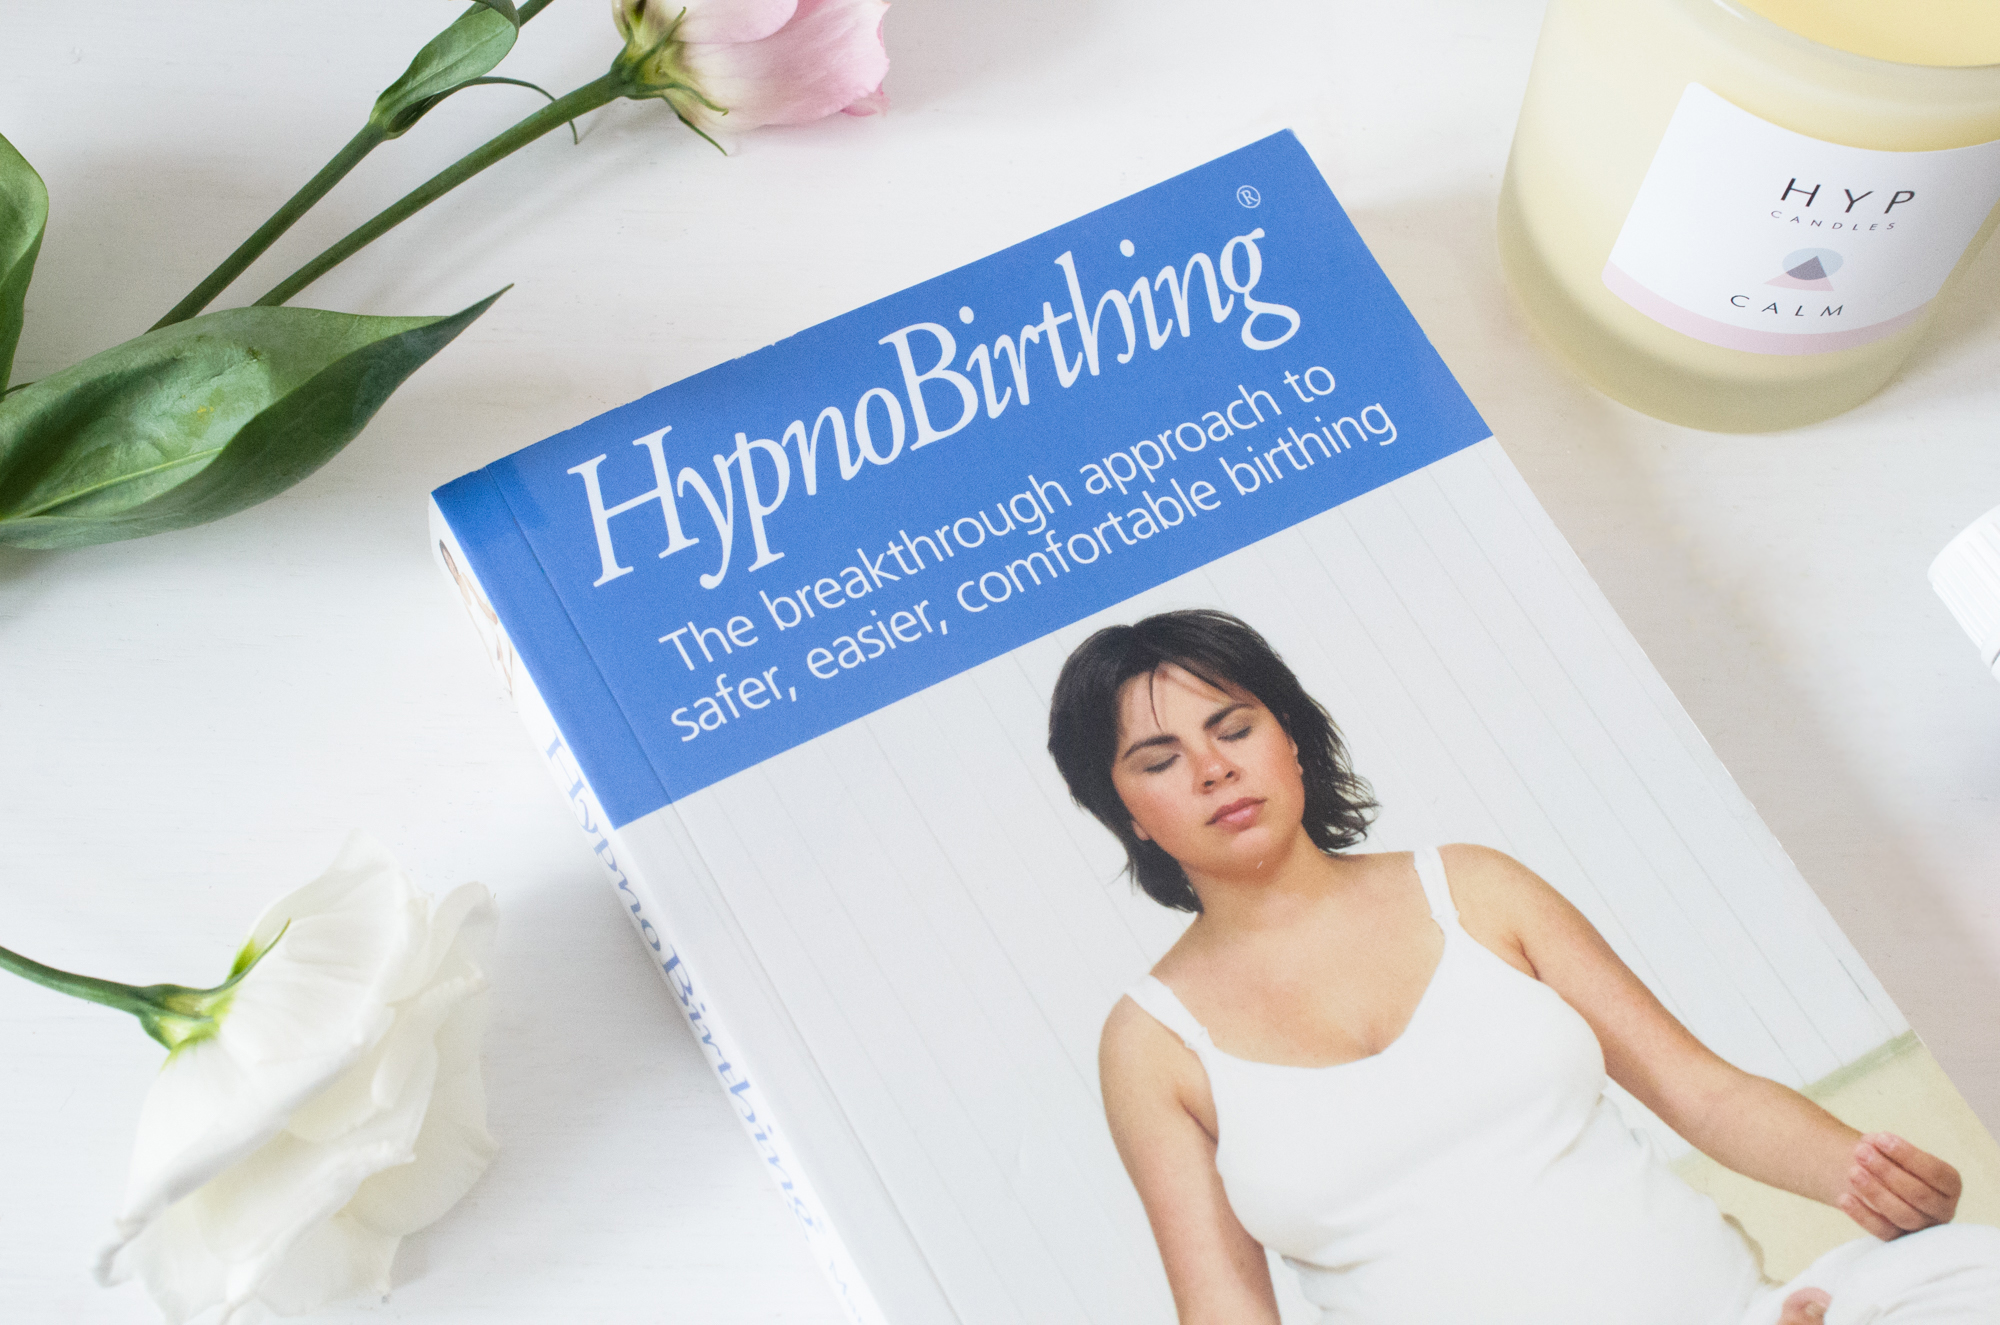 Hypnobirthing: The Mongan Method